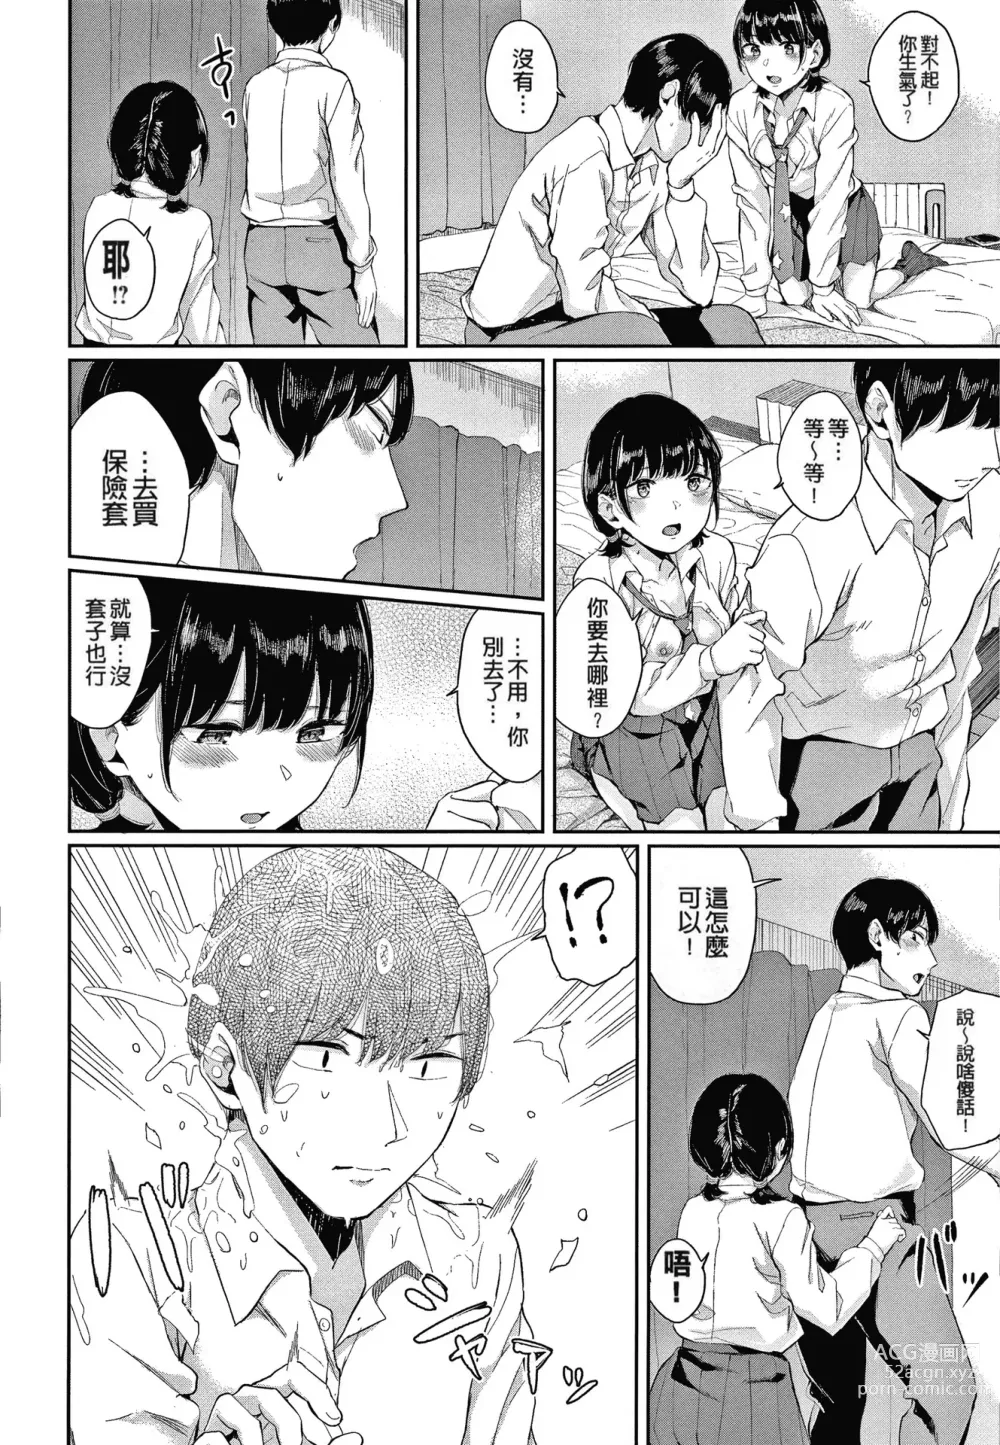 Page 12 of manga Hikage no Hana (uncensored)